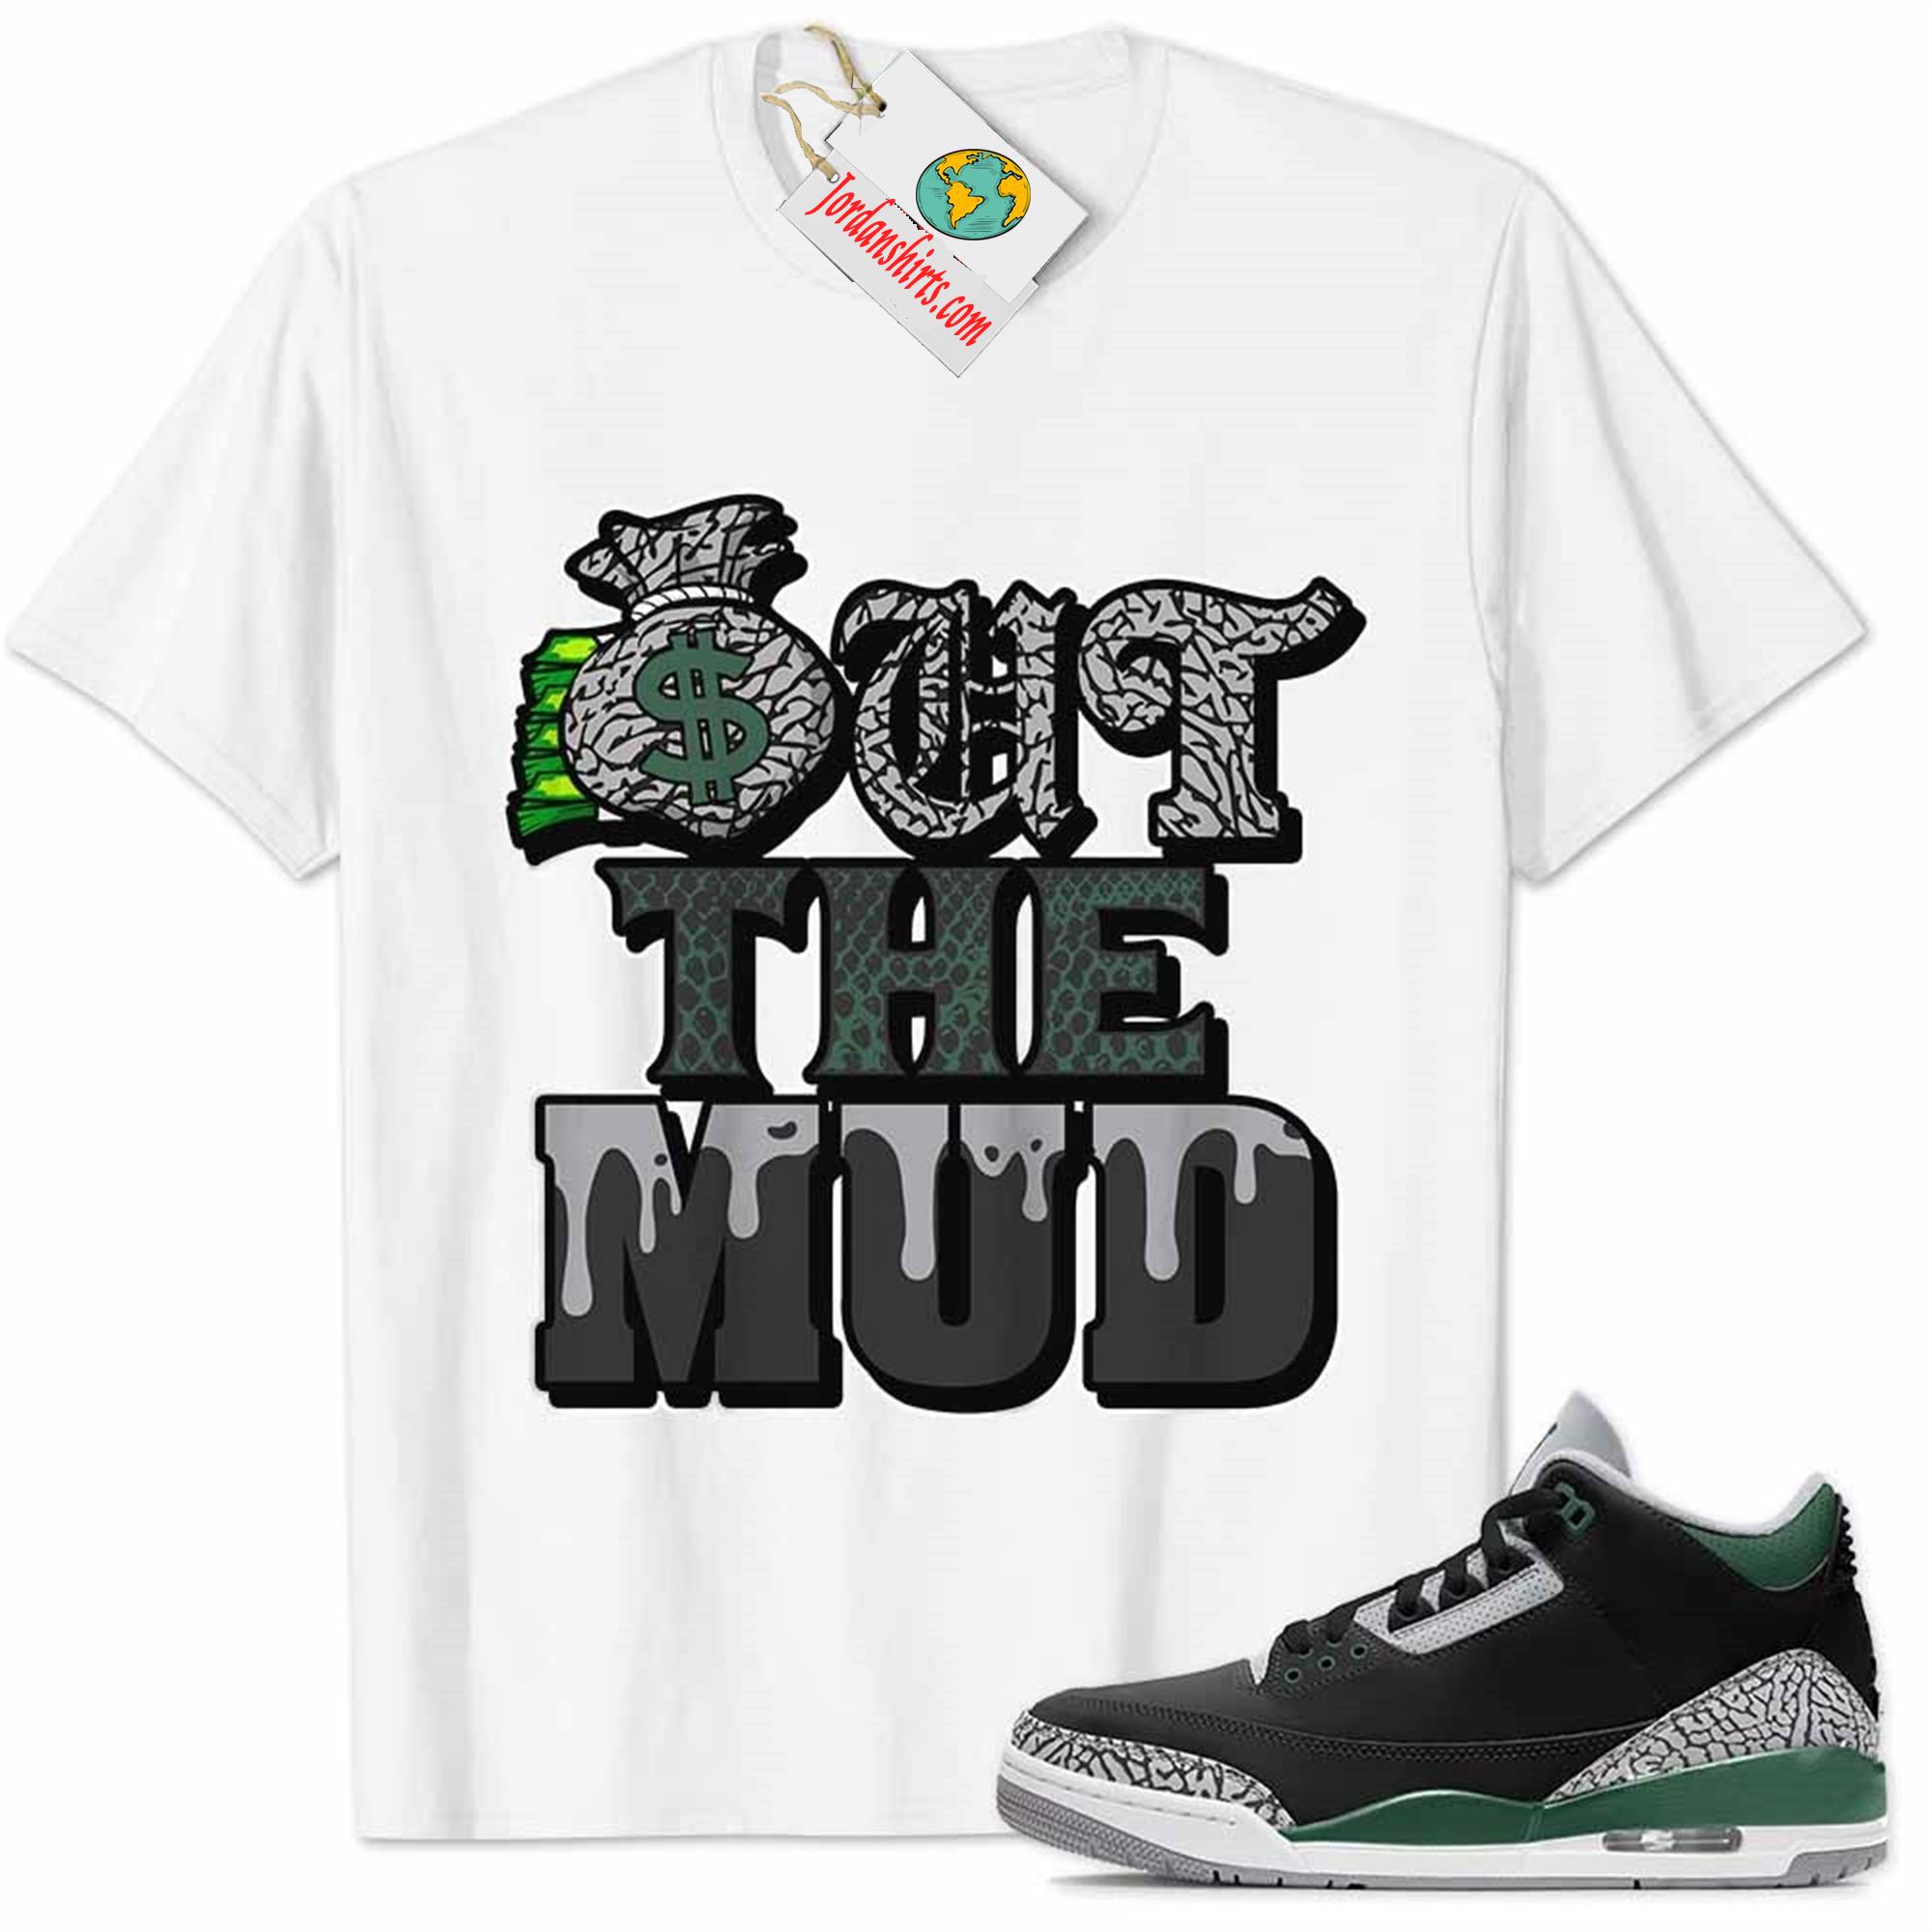 Jordan 3 Shirt, Jordan 3 Pine Green Shirt Out The Mud Money Bag White Plus Size Up To 5xl